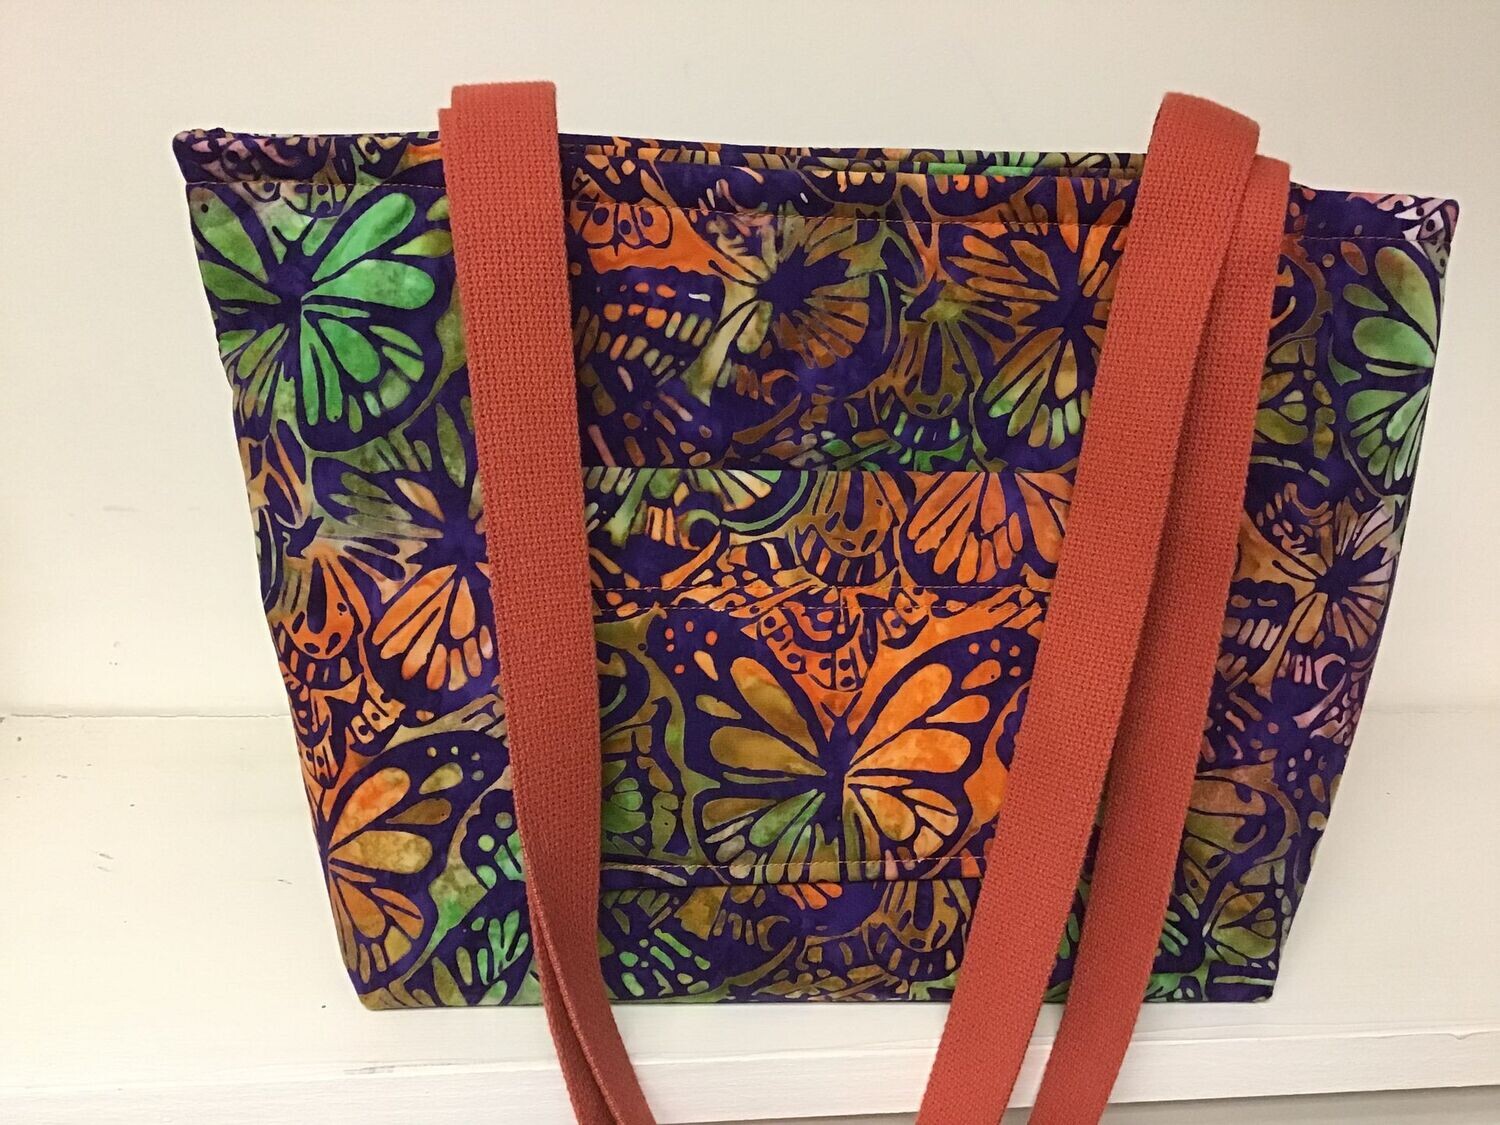 Butterfly batik print in orange, greens, and purple, burnt orange straps